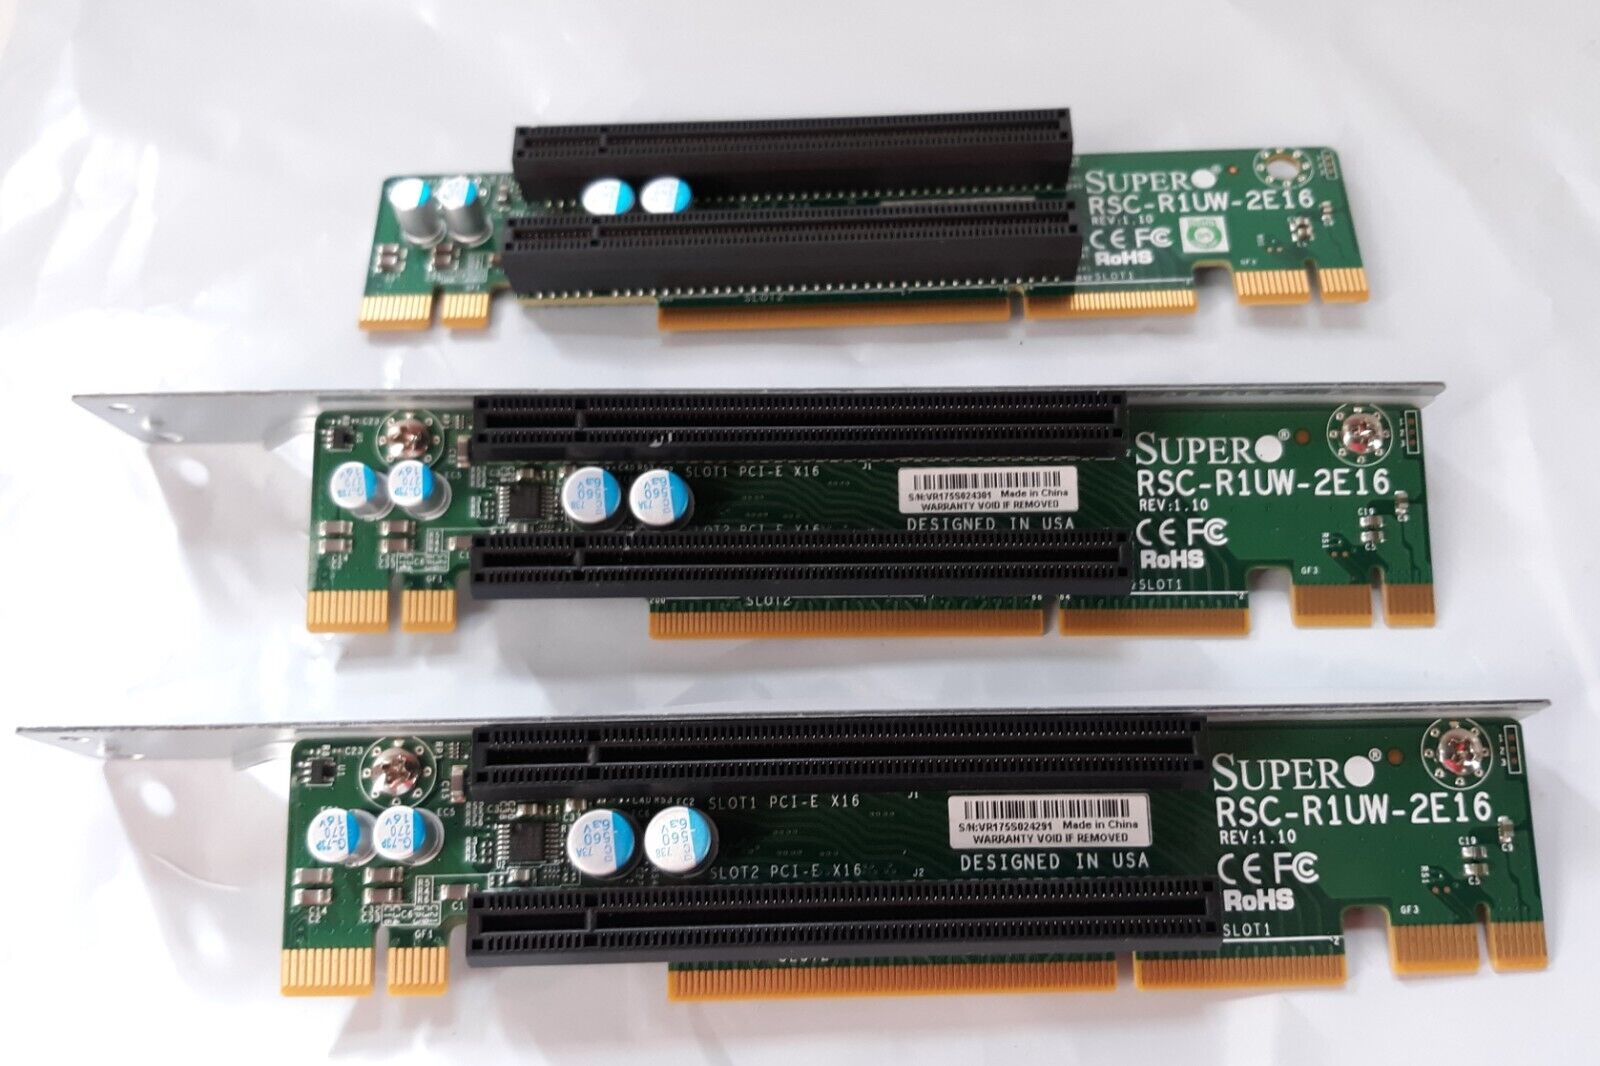 Lot of 3 Supermicro RSC-R1UW-2E16 PCIe x16 Riser Card *PULLED*